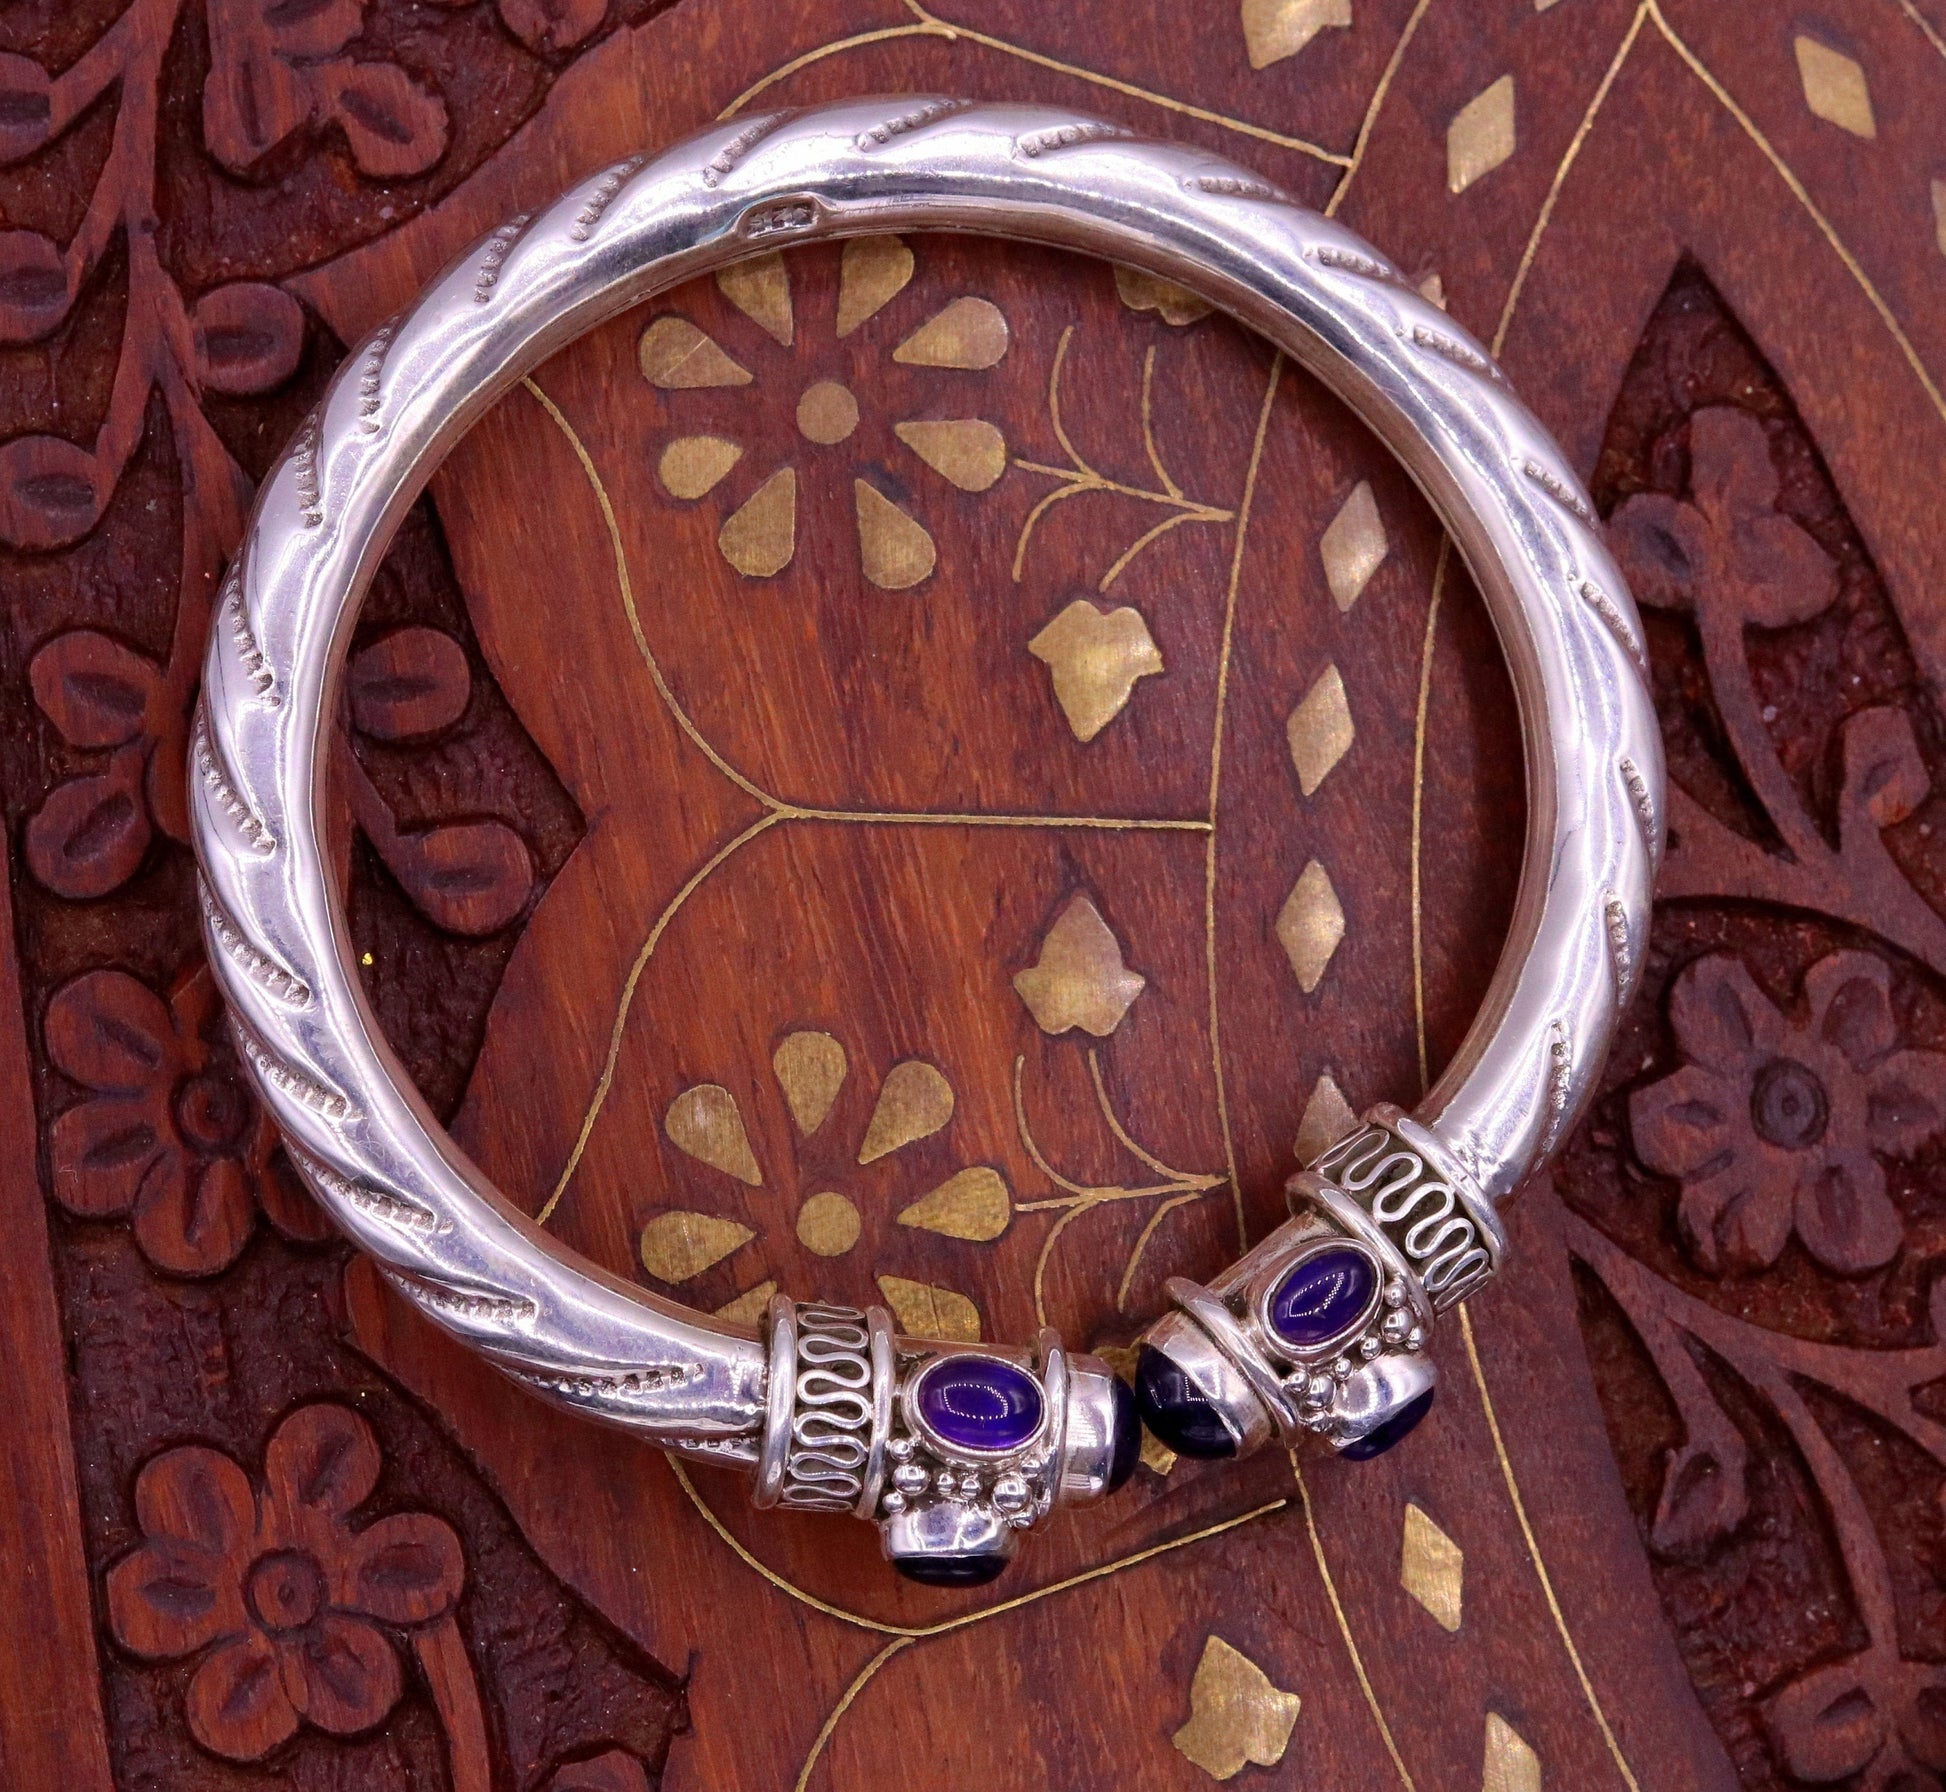 925 sterling silver handmade vintage design bangle bracelet kada with fabulous purple amethyst gemstone tribal unisex jewelry nsk223 - TRIBAL ORNAMENTS